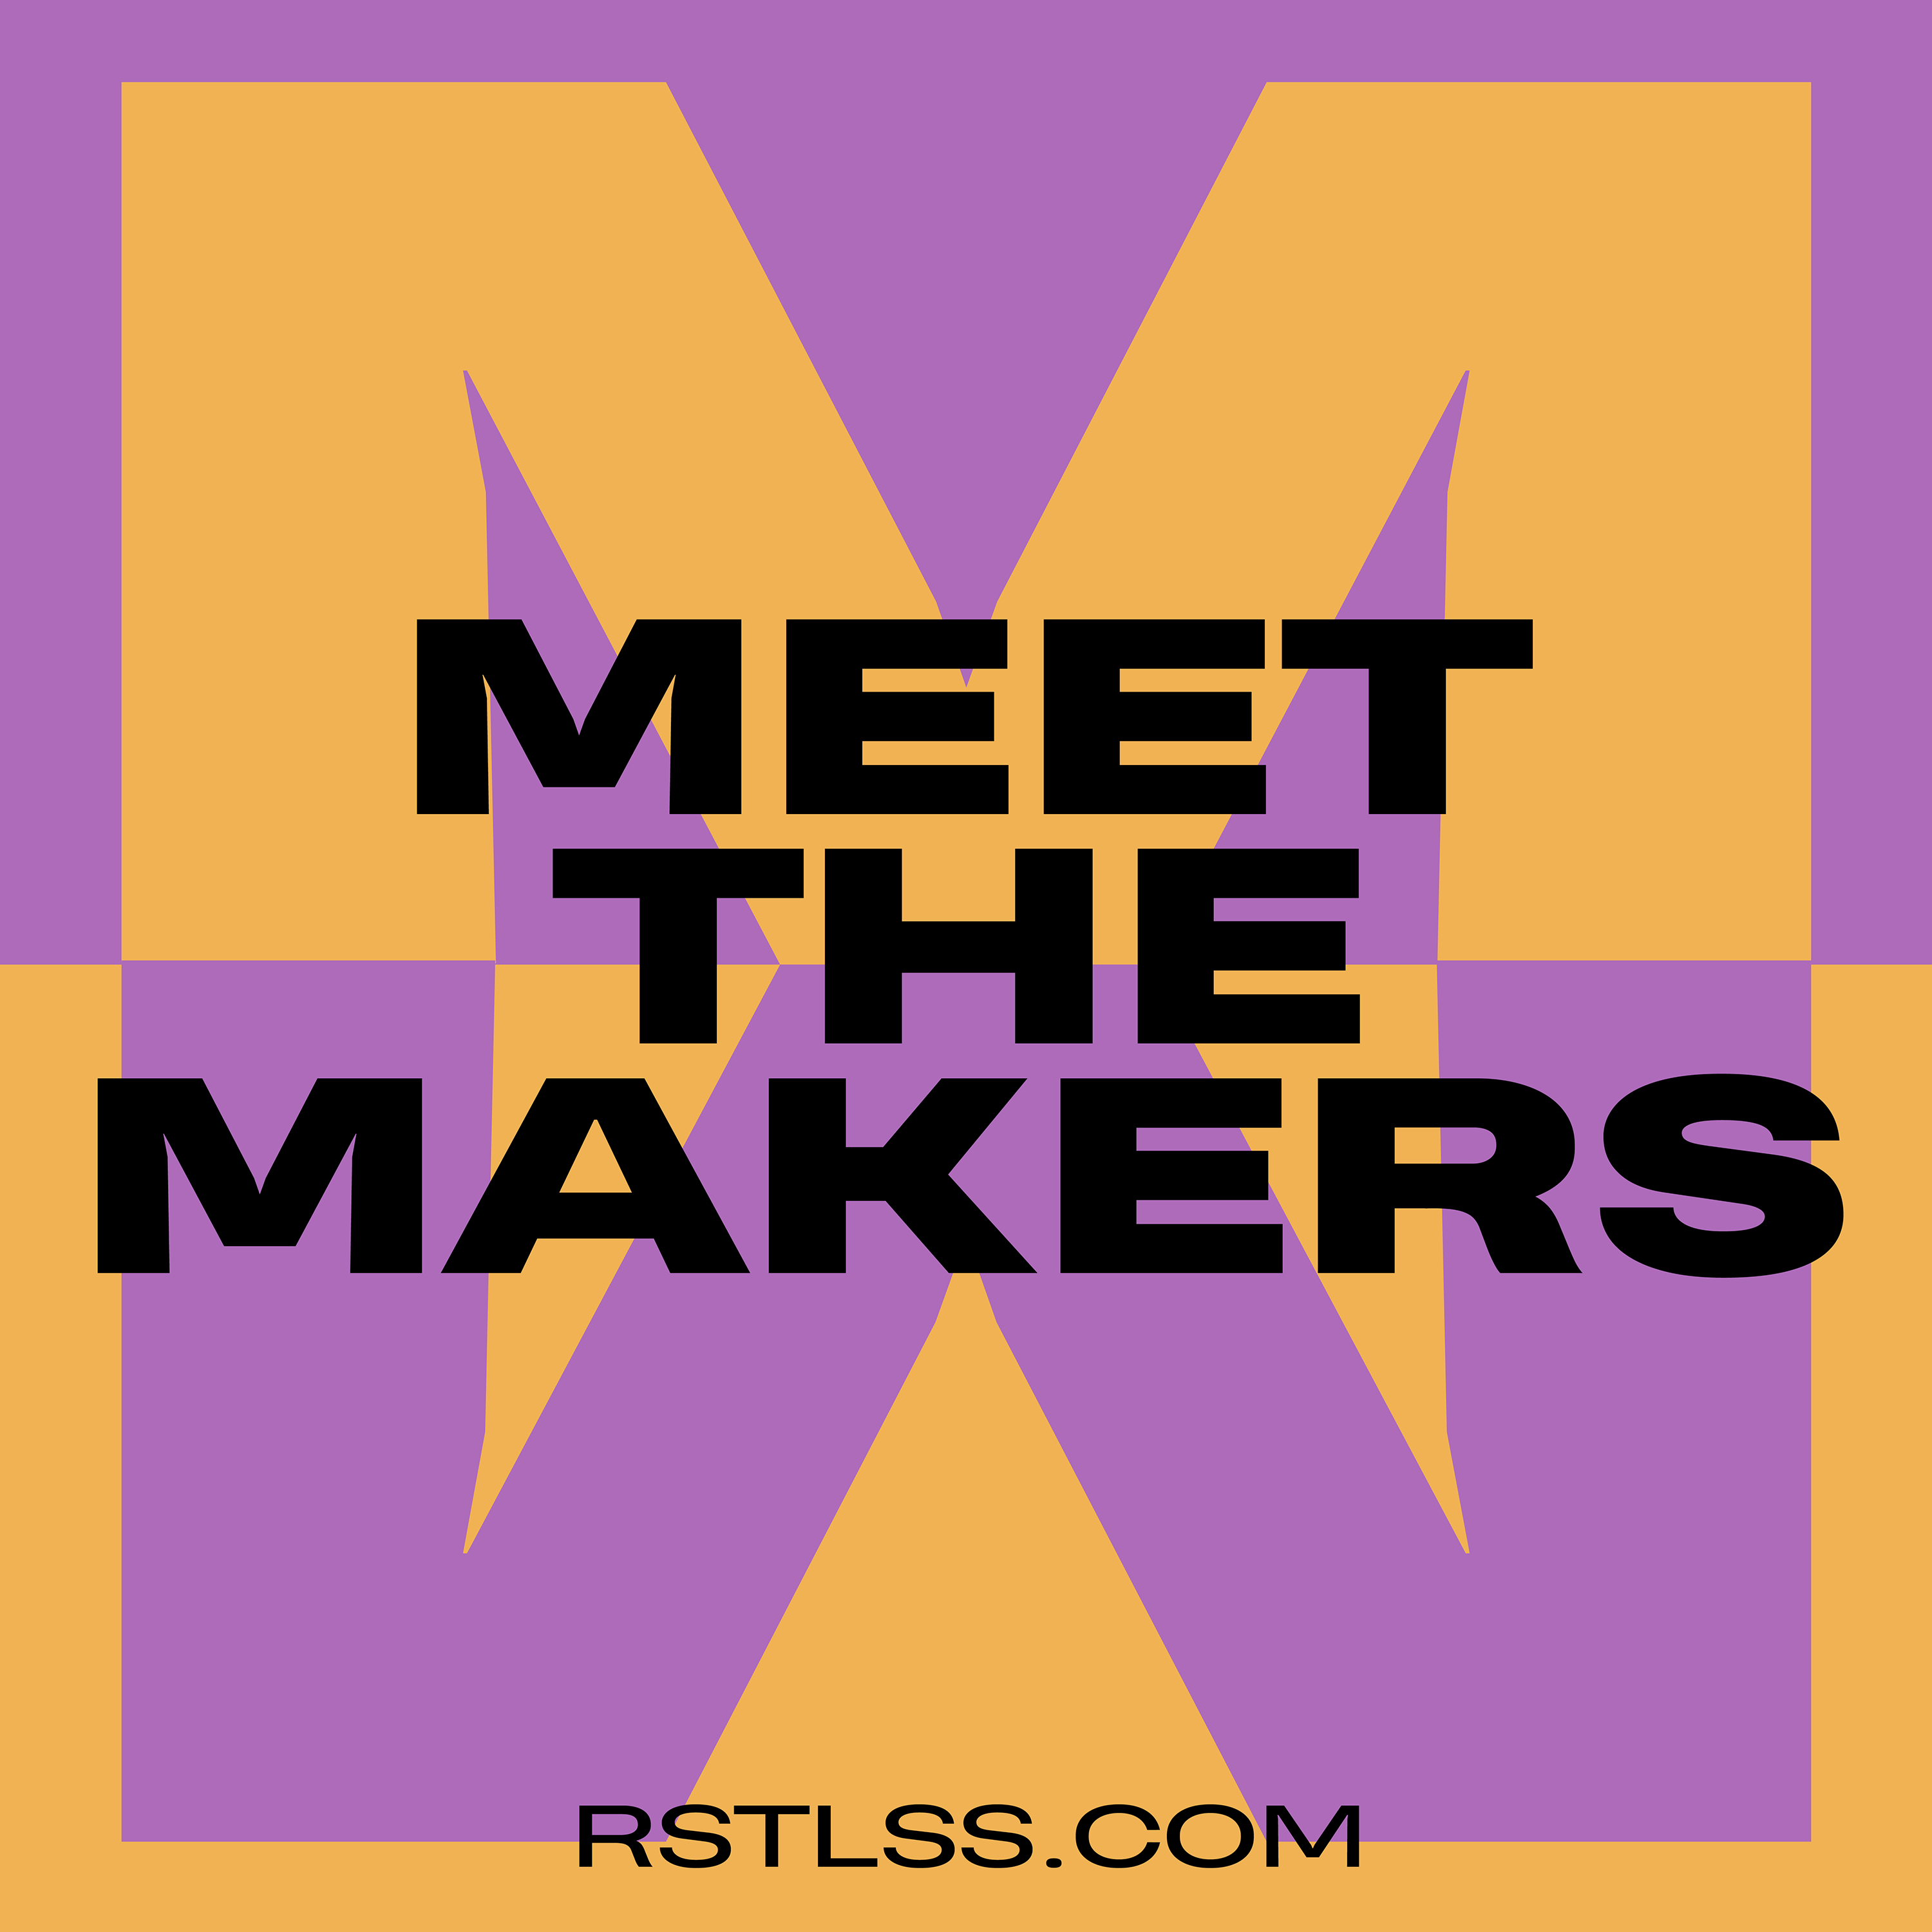 Meet The Makers / RSTLSS